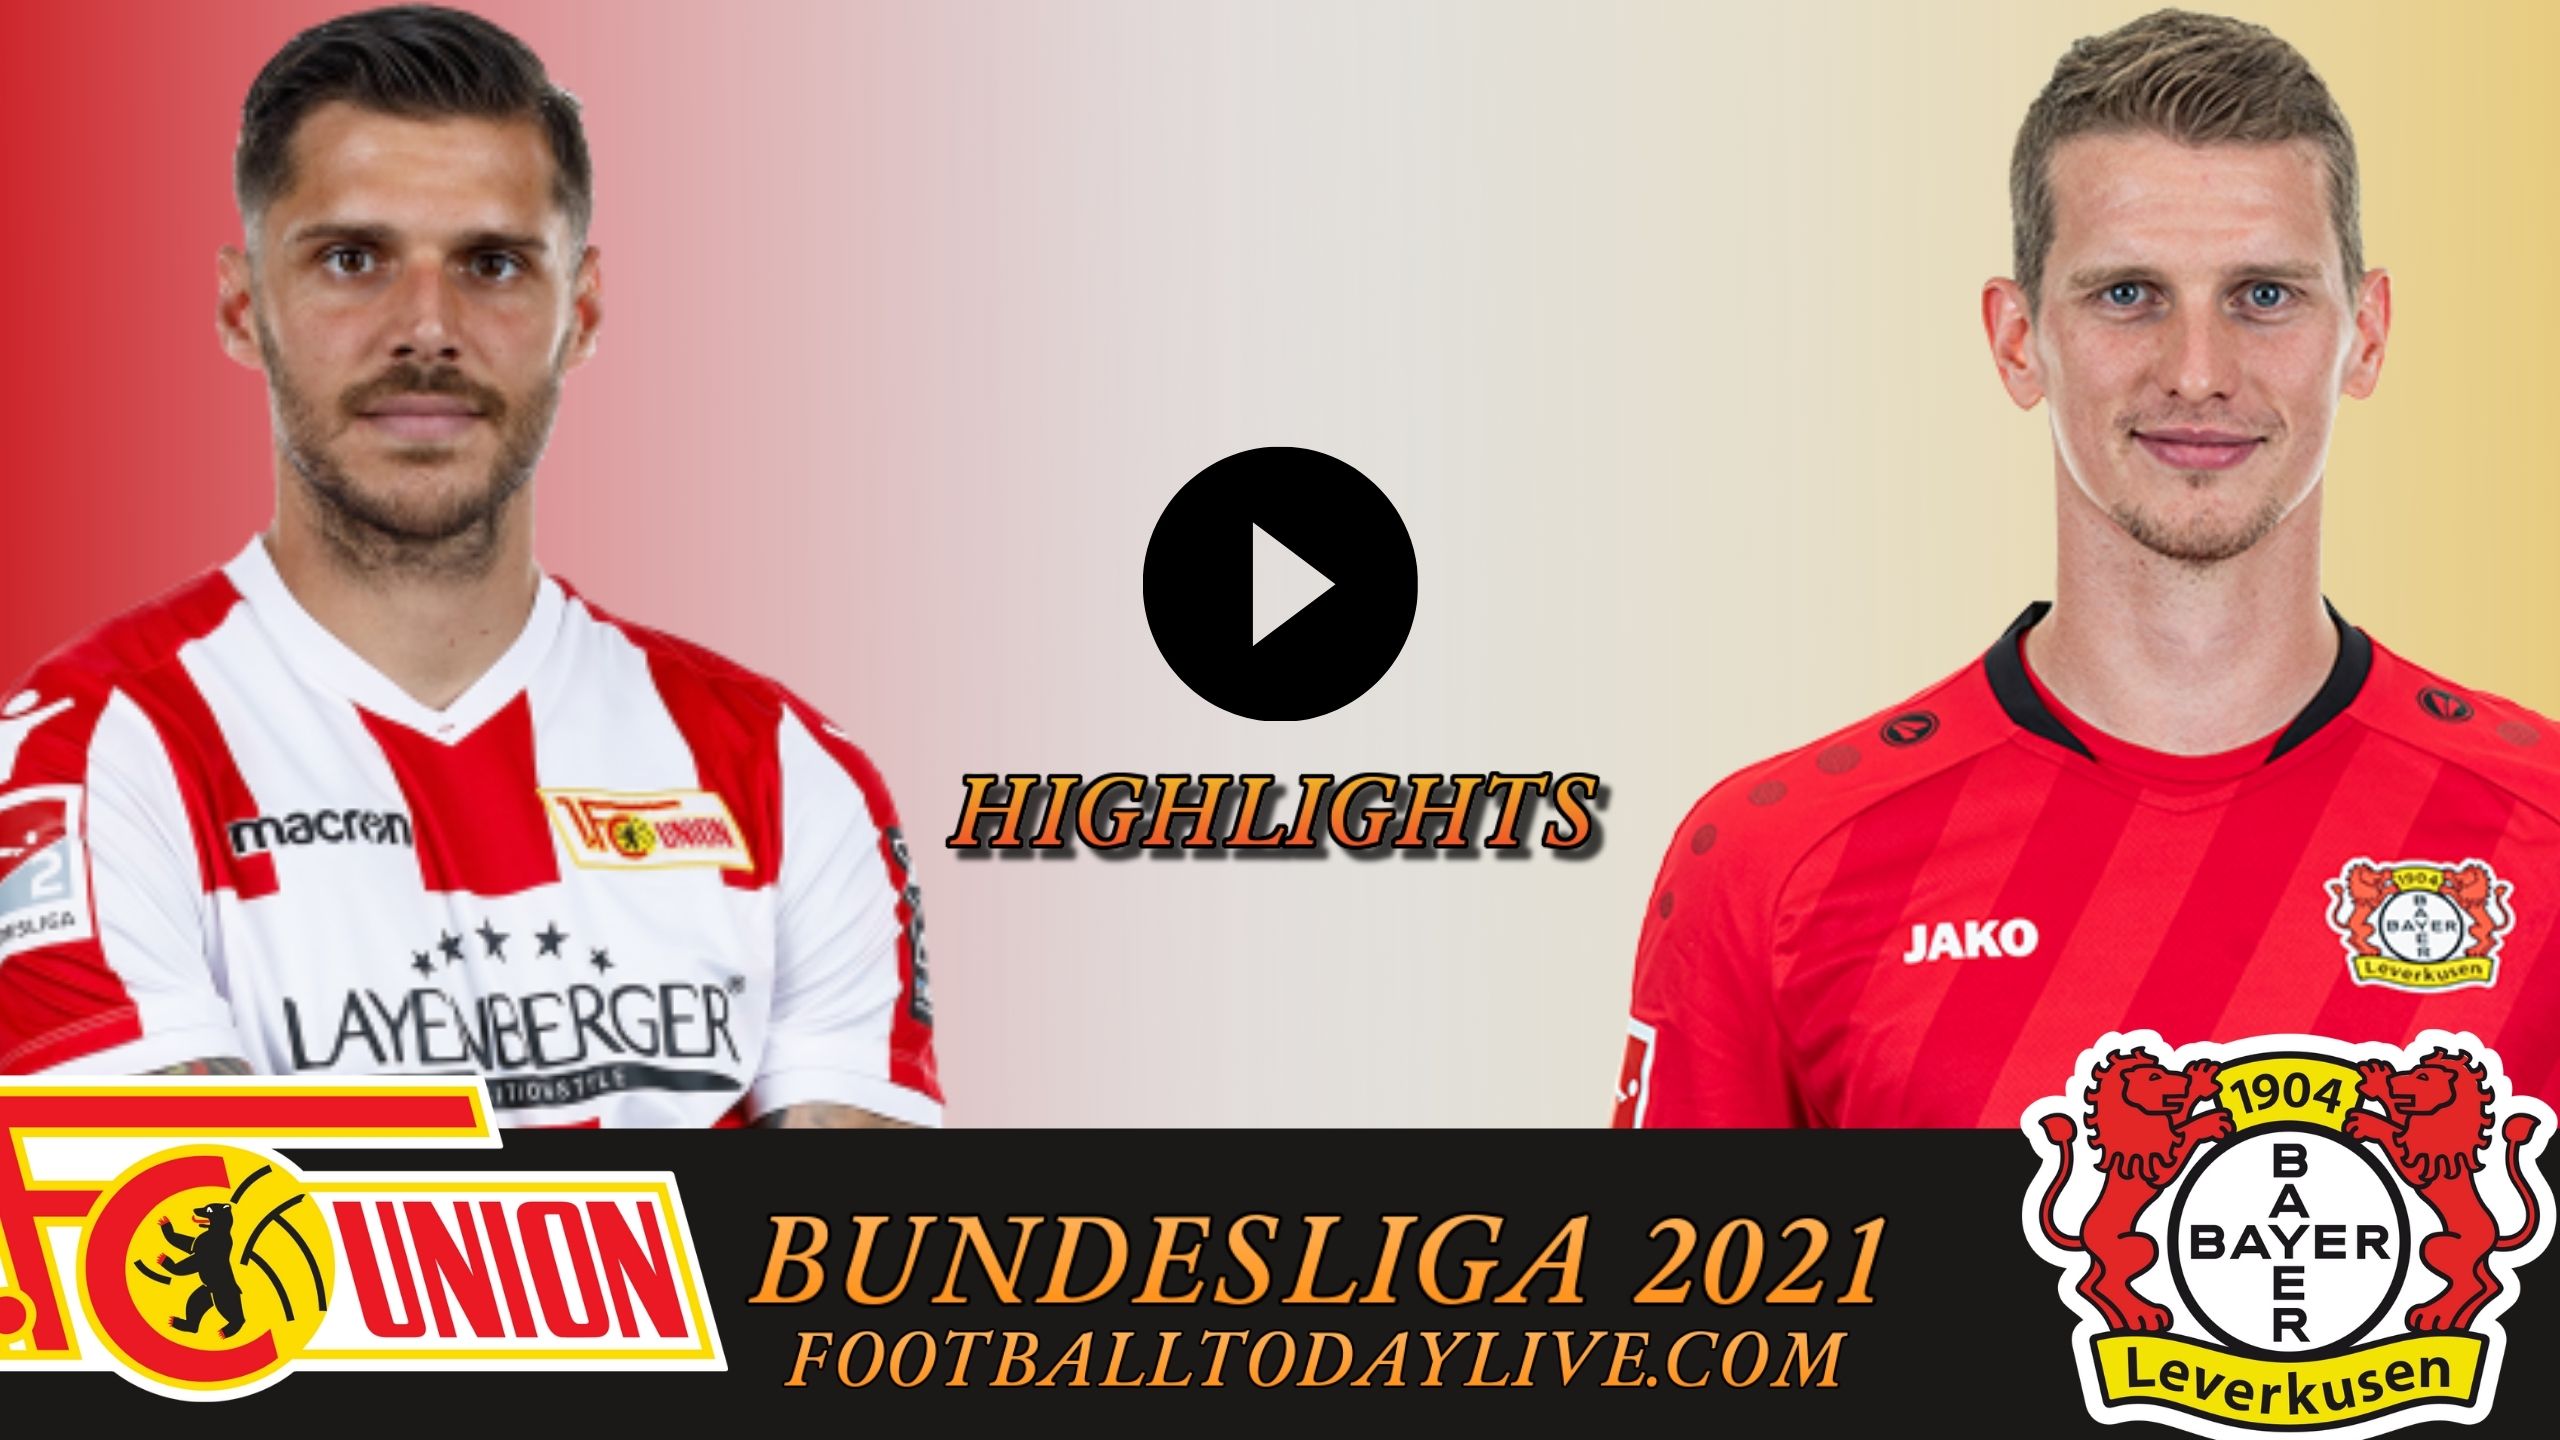 Union Berlin Vs Bayer Leverkusen Highlights 2021